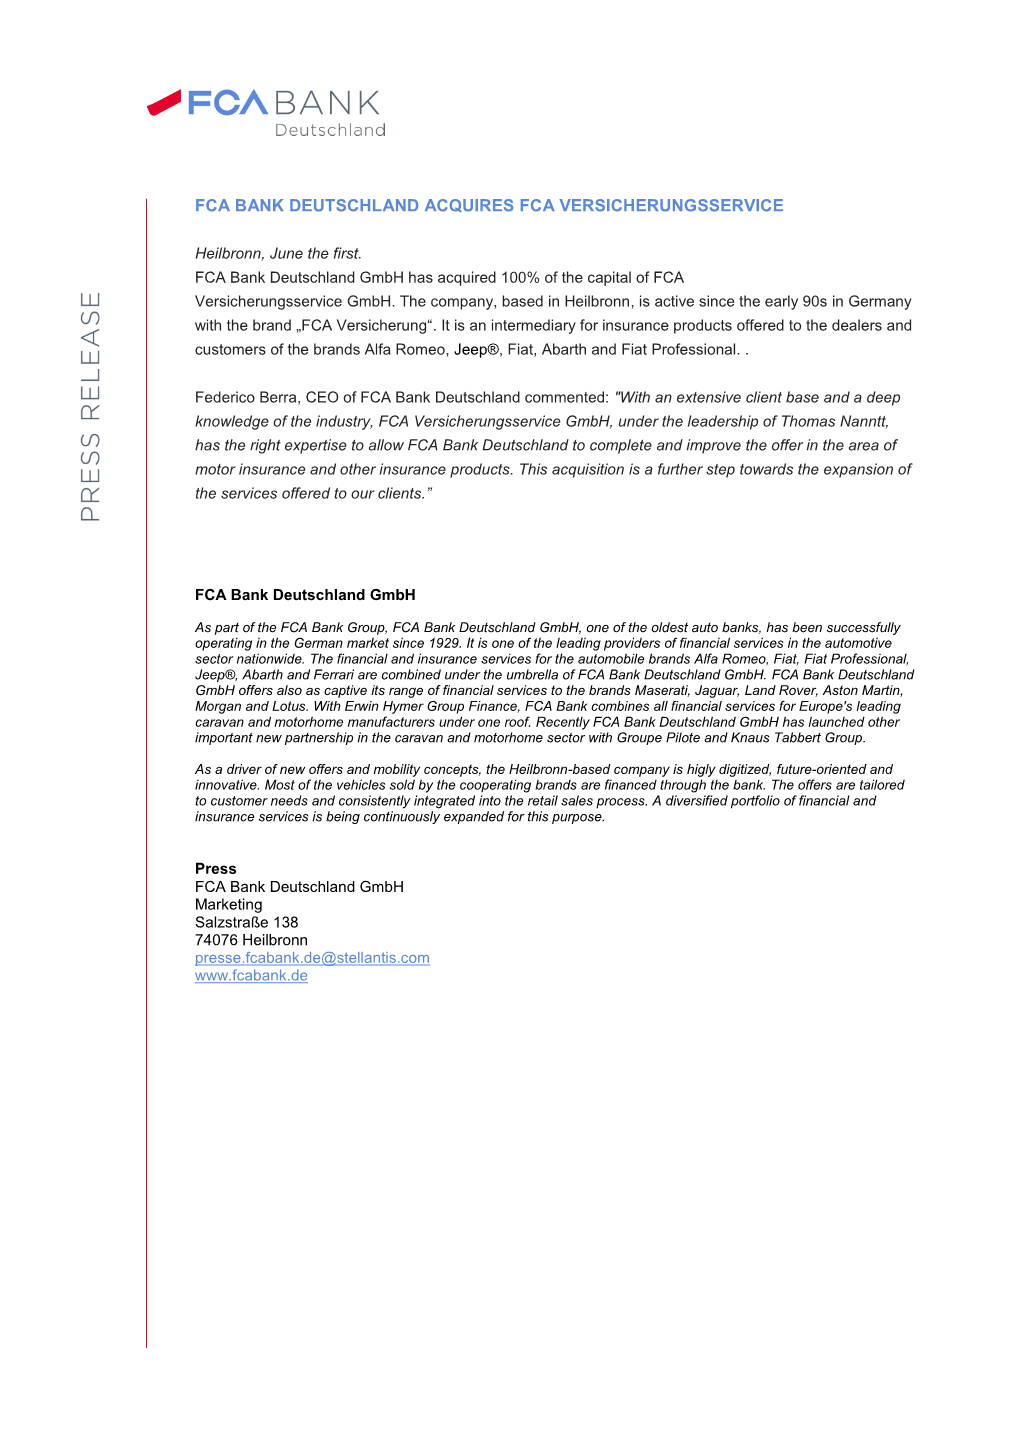 FCA BANK Press Release